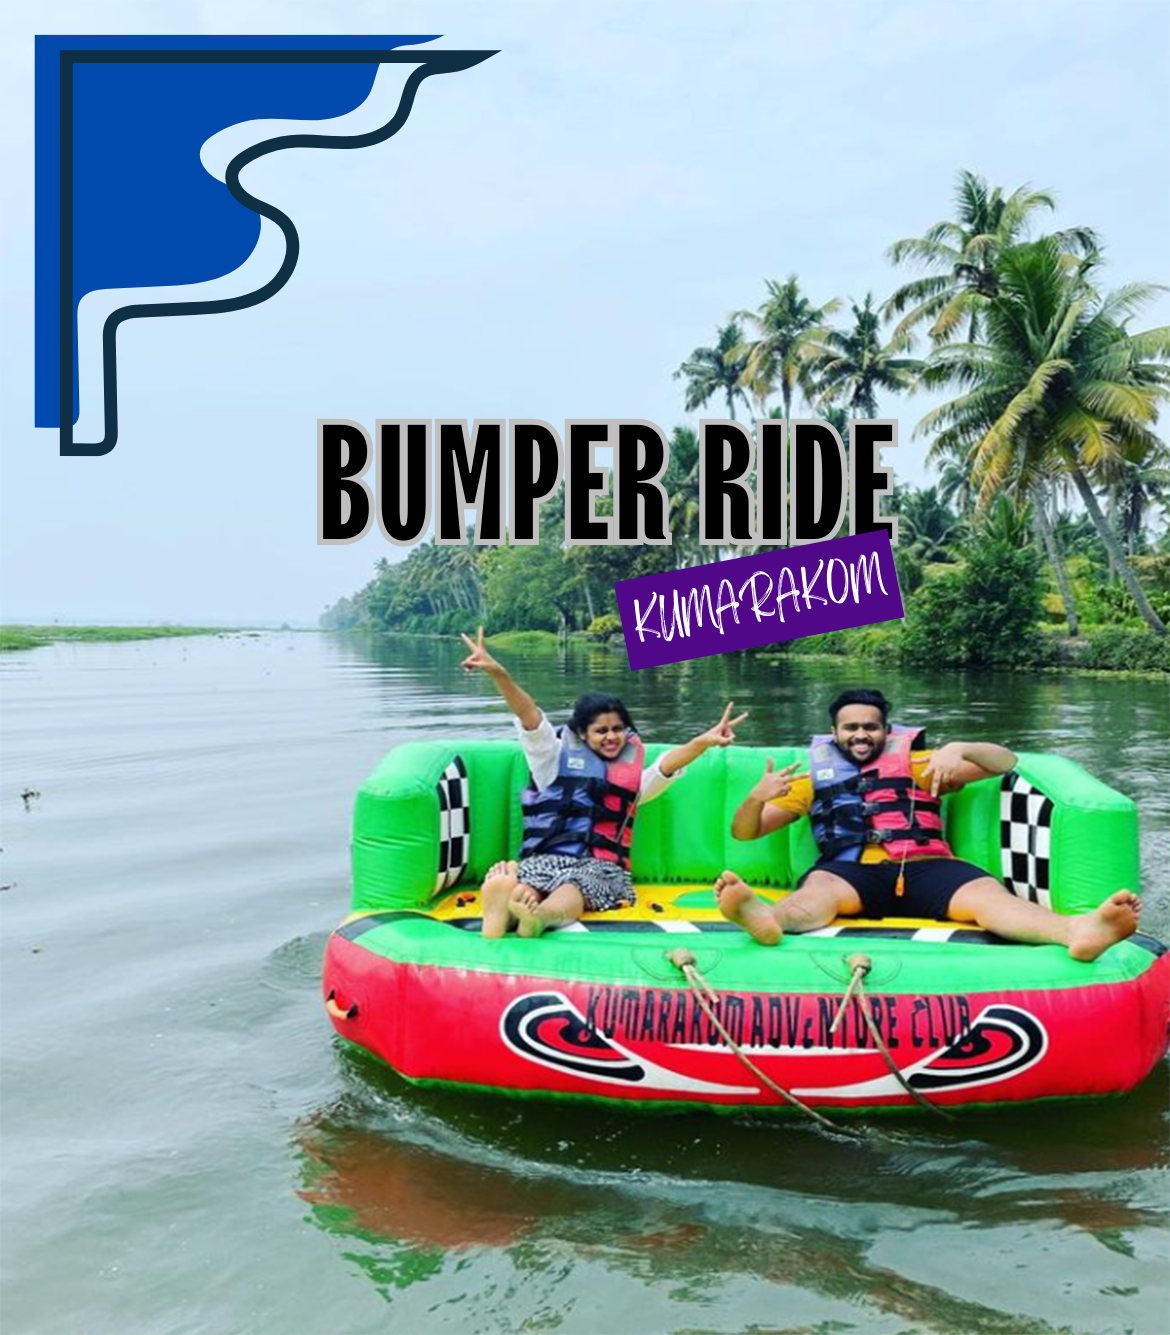 Bumper Ride in Kumarakom